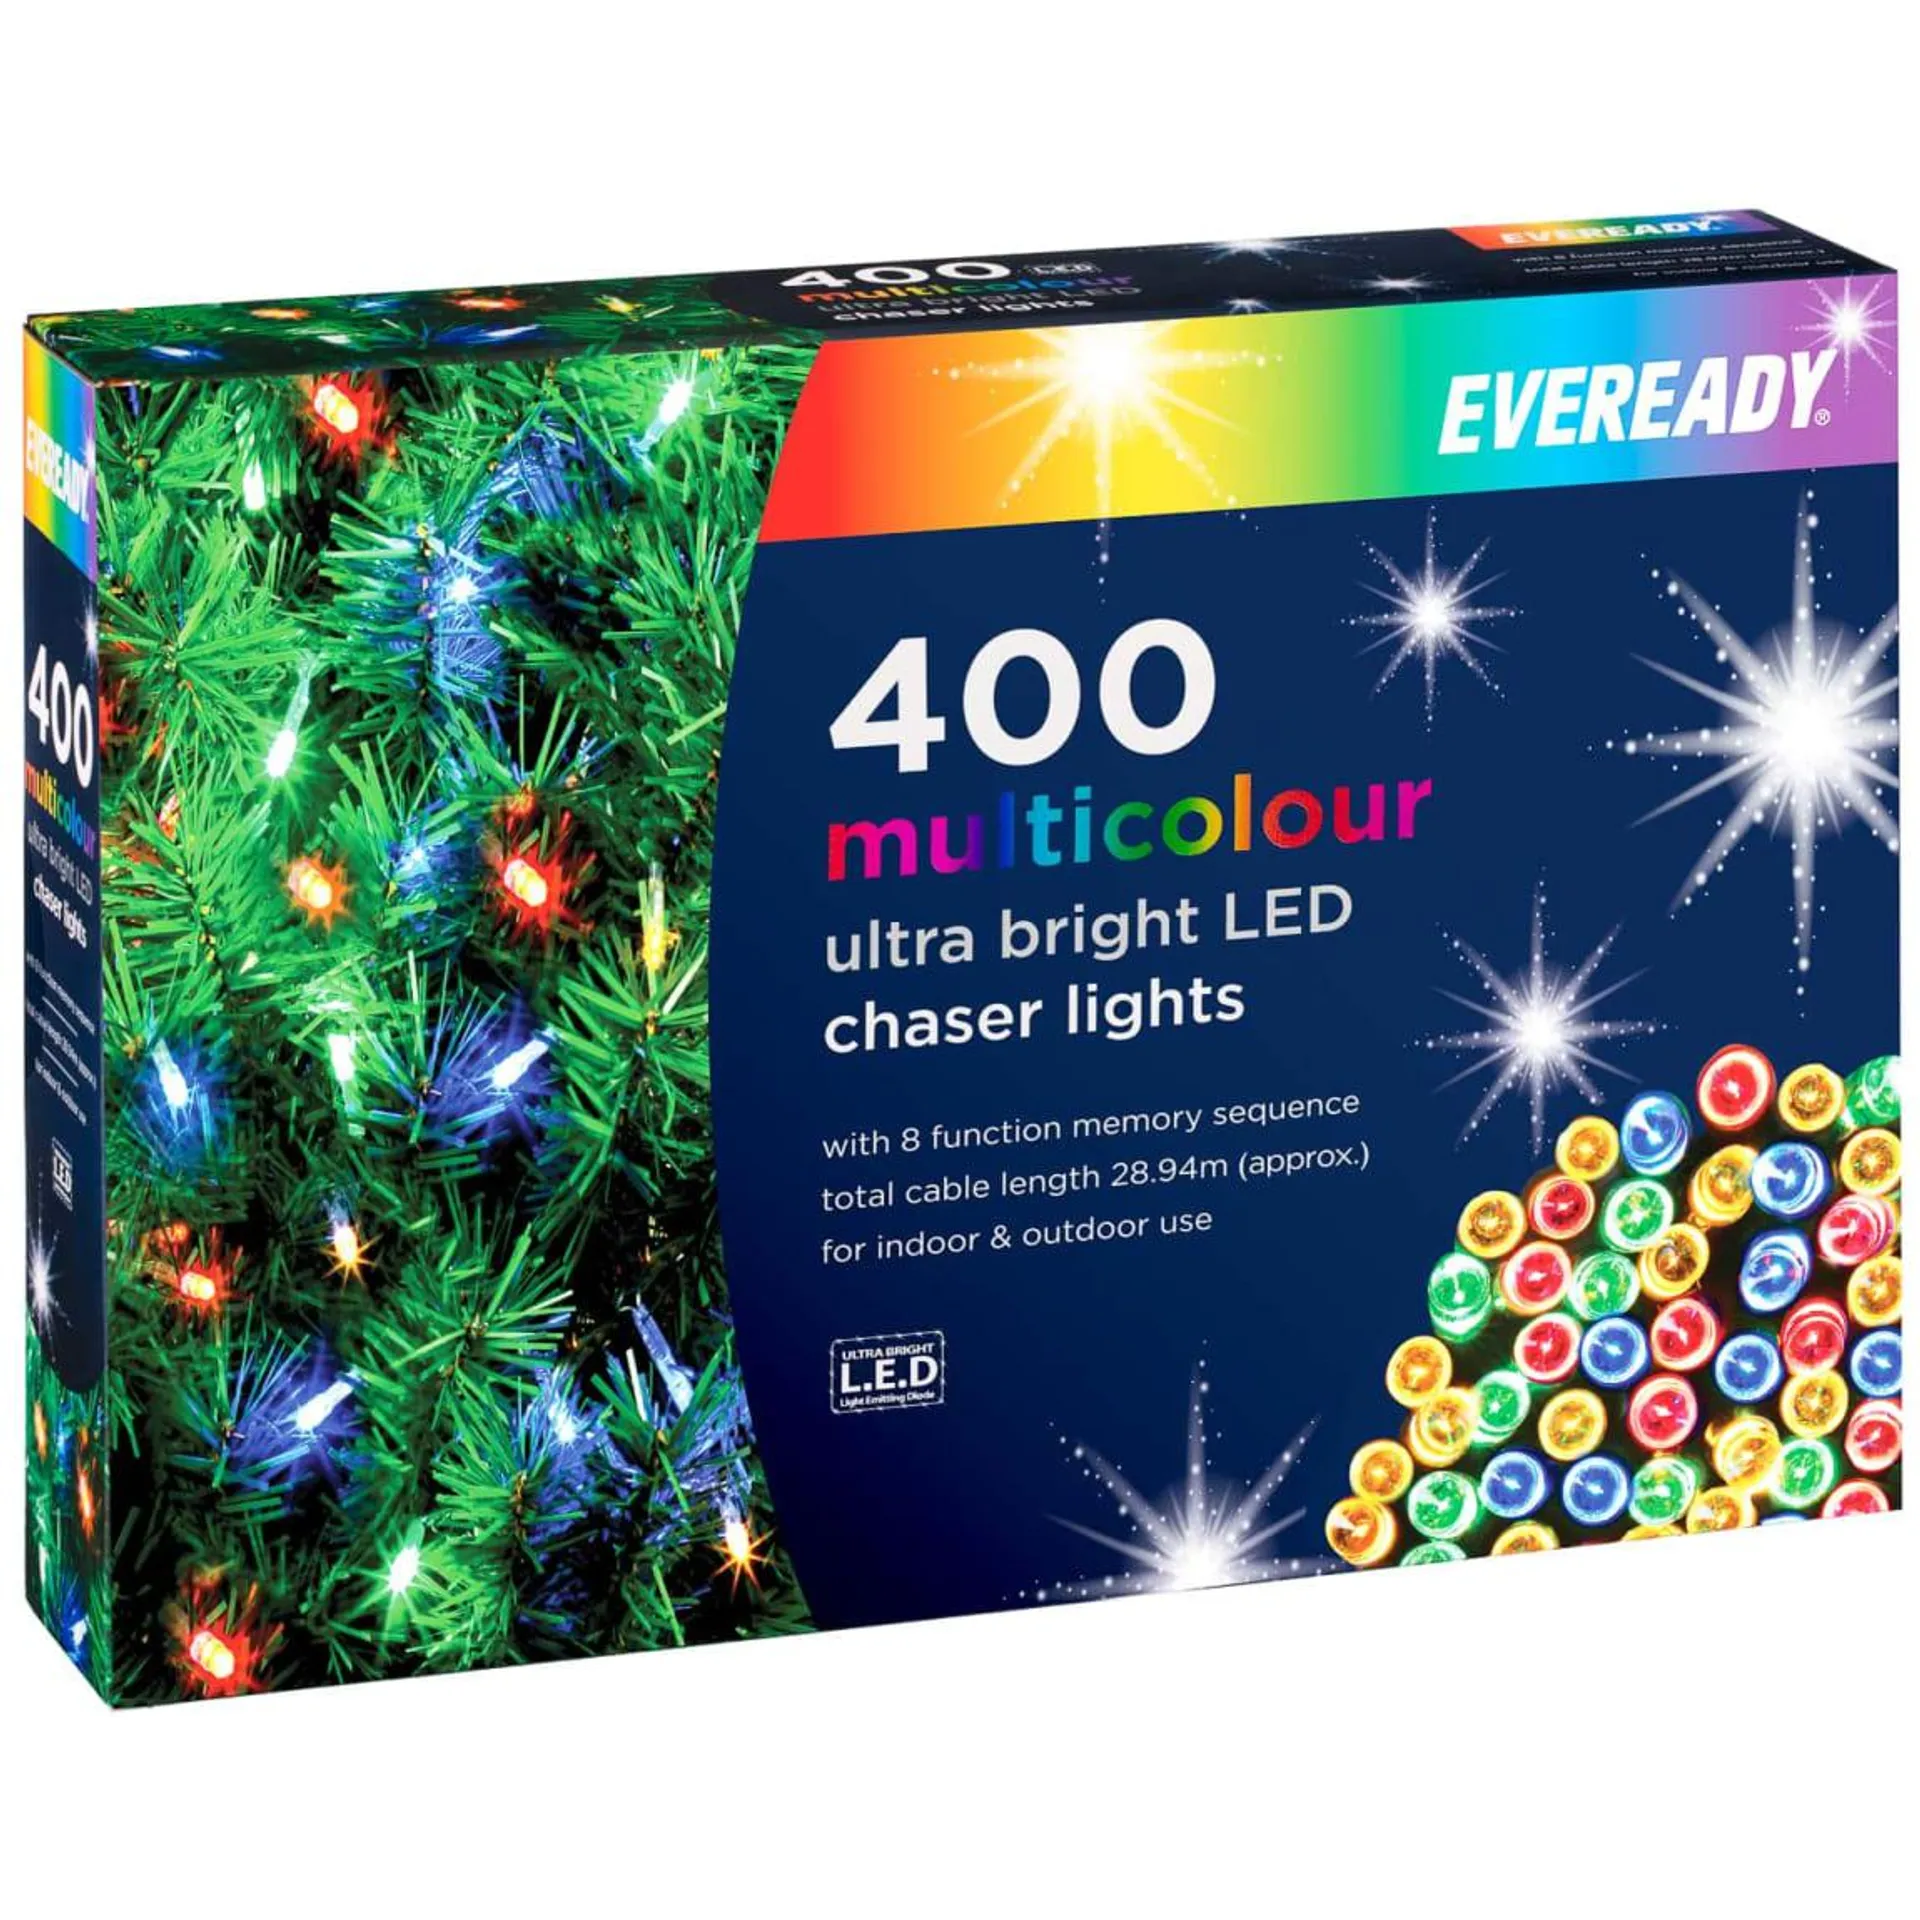 Eveready Ultra Bright LED Chaser Lights 400pk - Multicolour